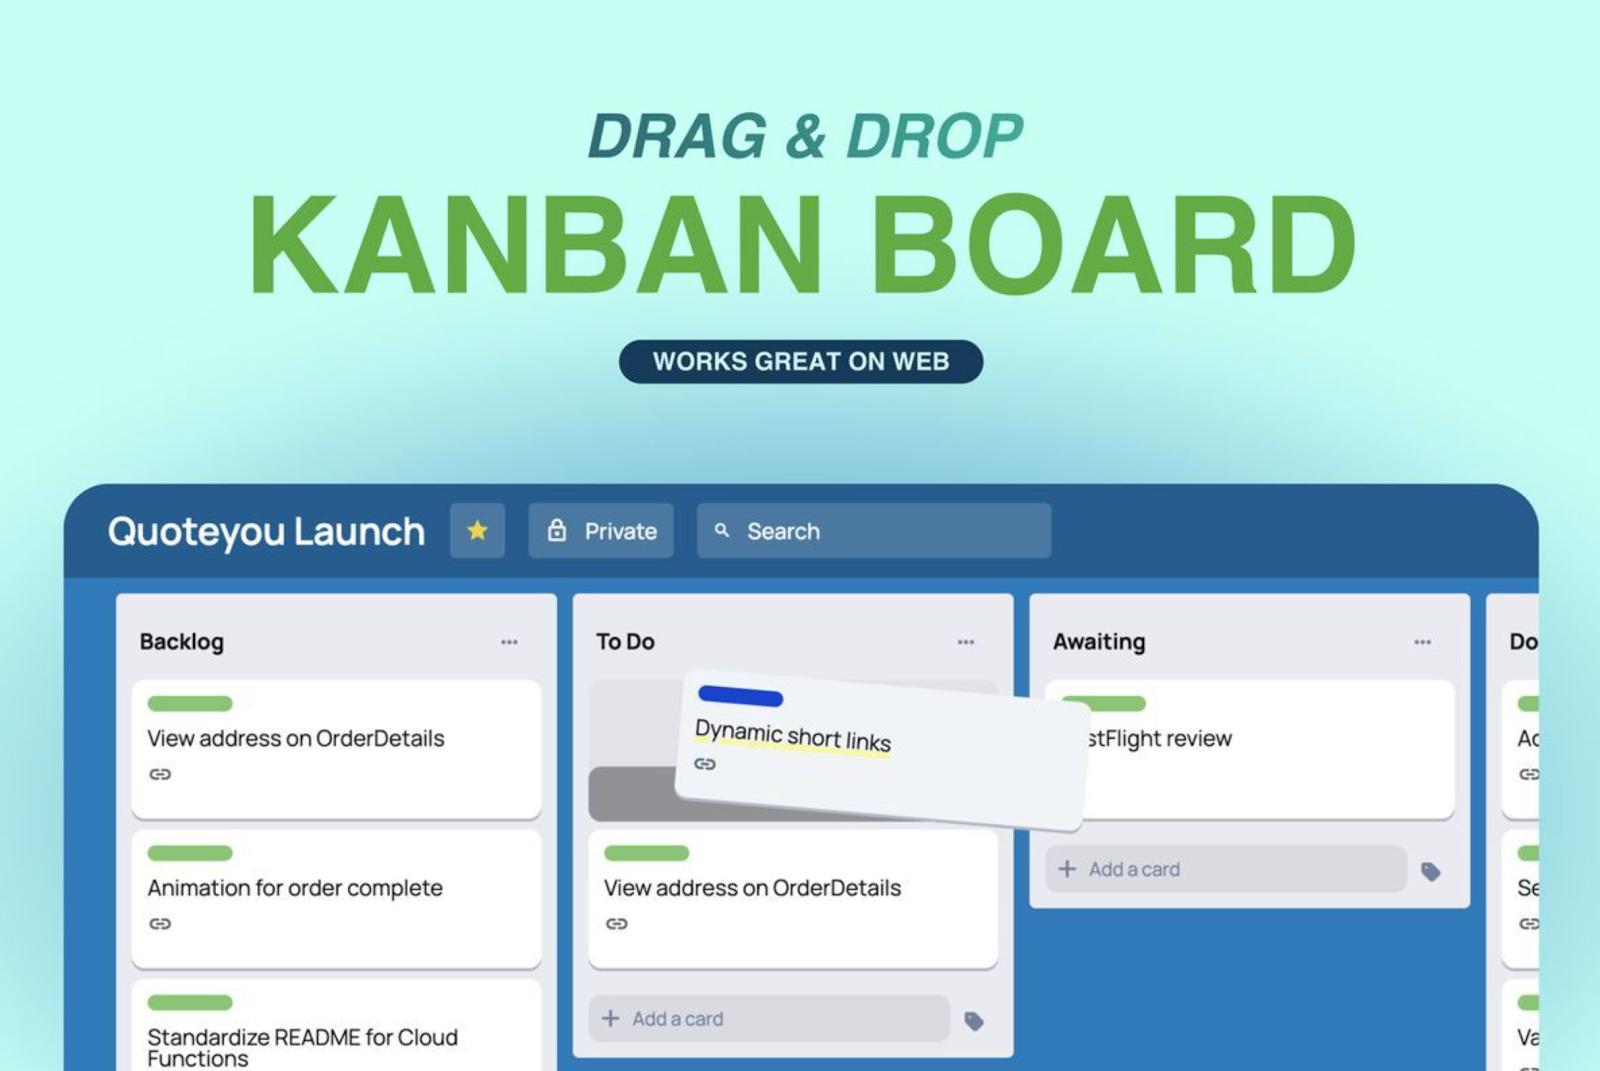 10. Drag & Drop Kanban Board